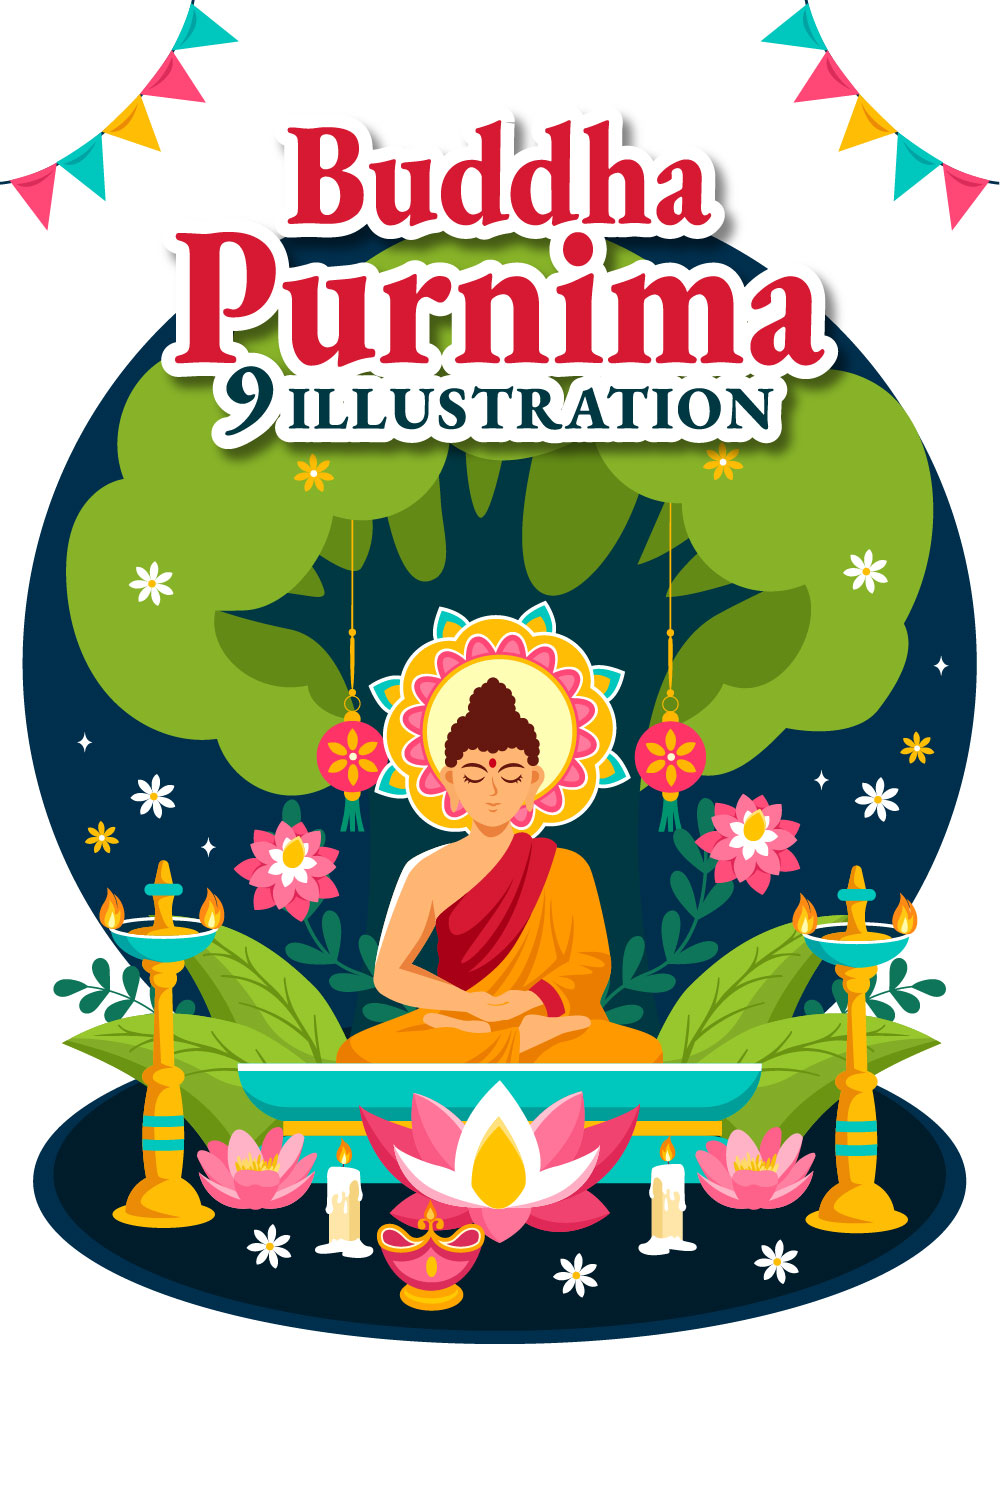 9 Buddha Purnima Illustration pinterest preview image.